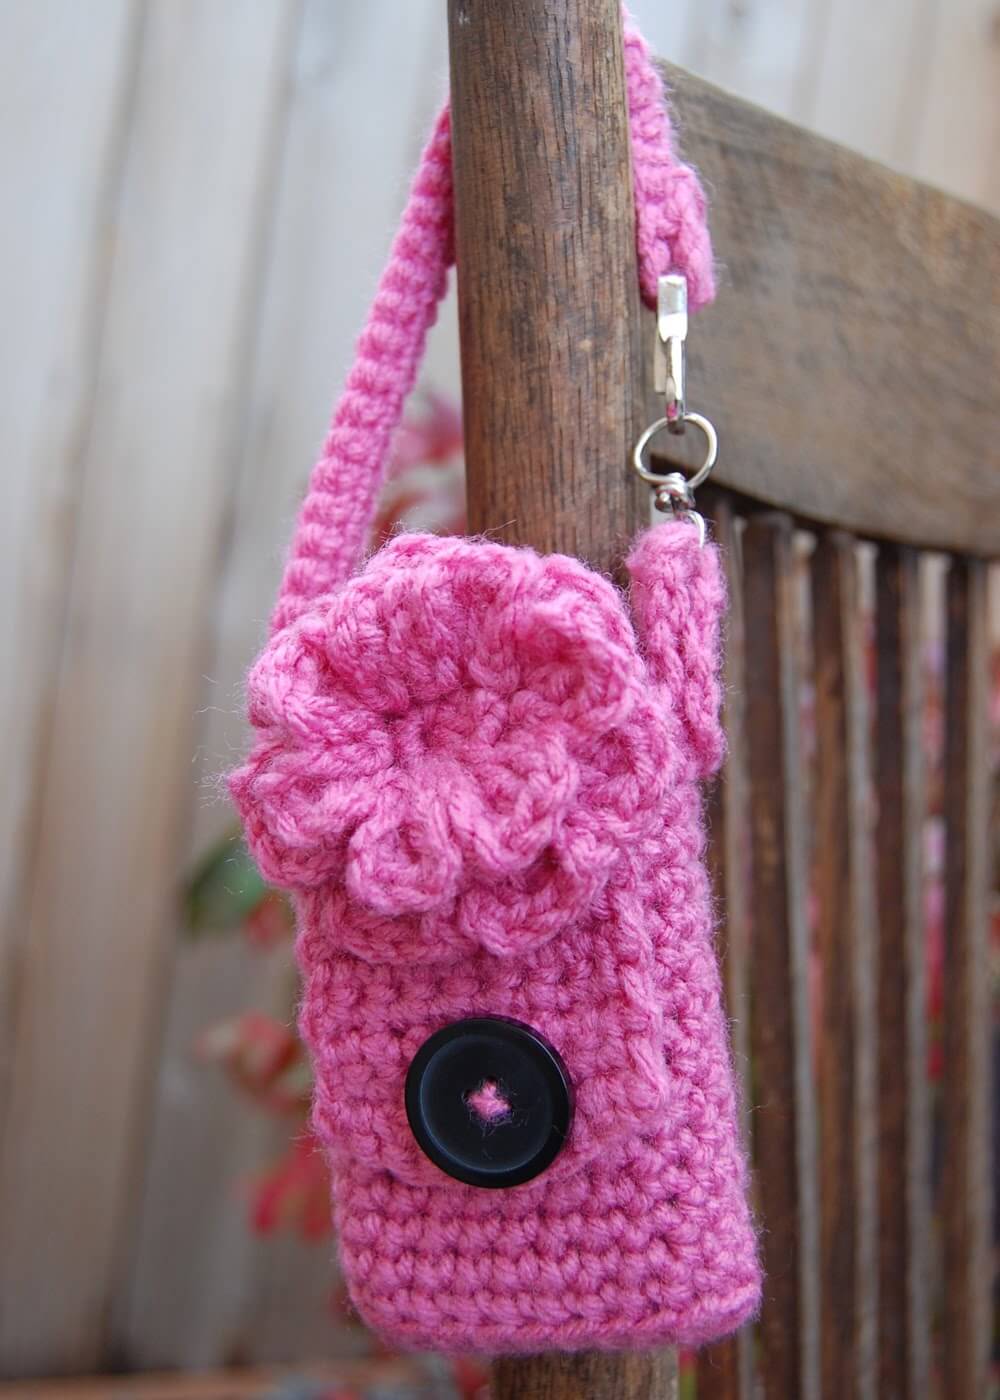 35 Adorable Crochet Mobile Phone Covers | DIY to Make